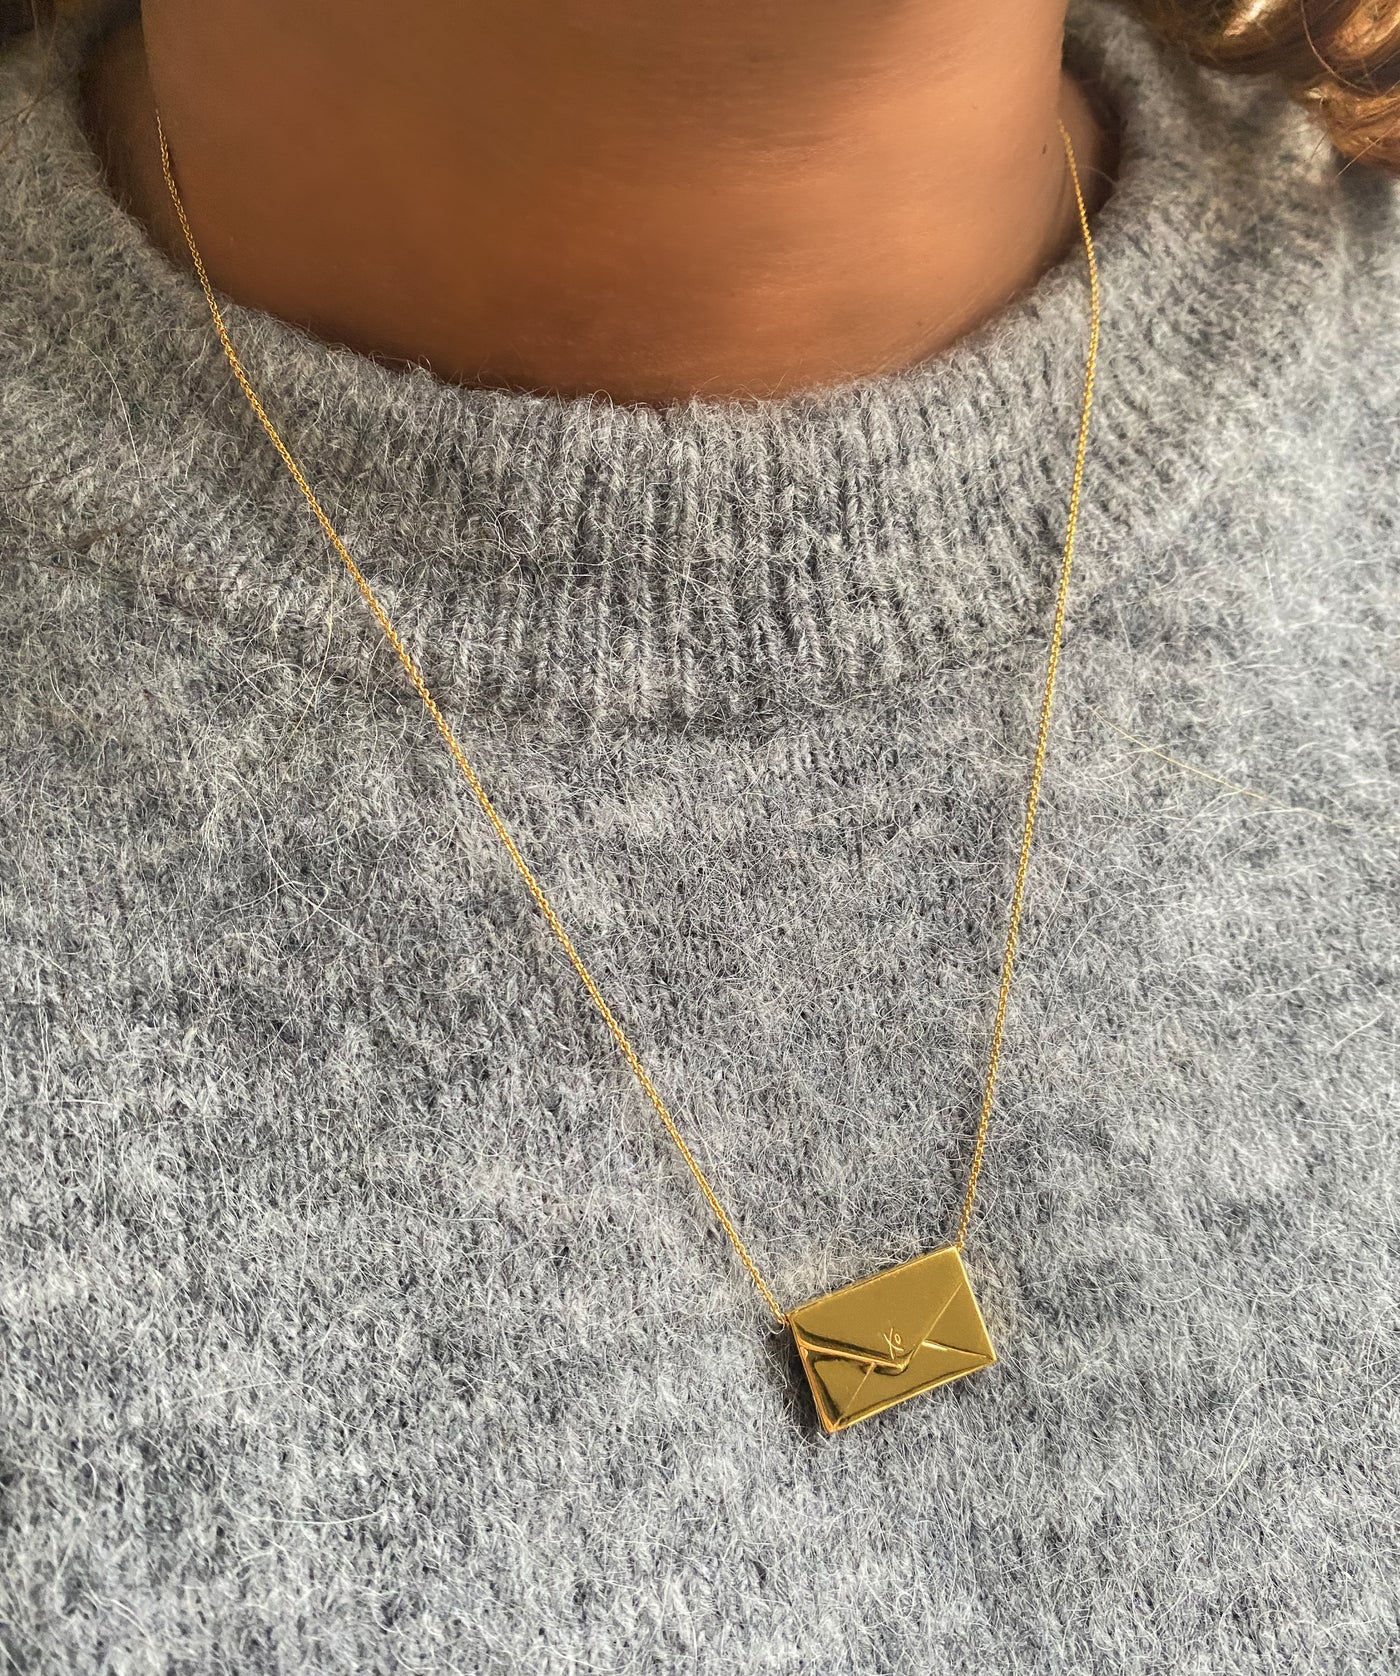 Model wearing gold engraved reversible envelope necklace with CZ crystalModel wearing gold engraved reversible envelope necklace with CZ crystal